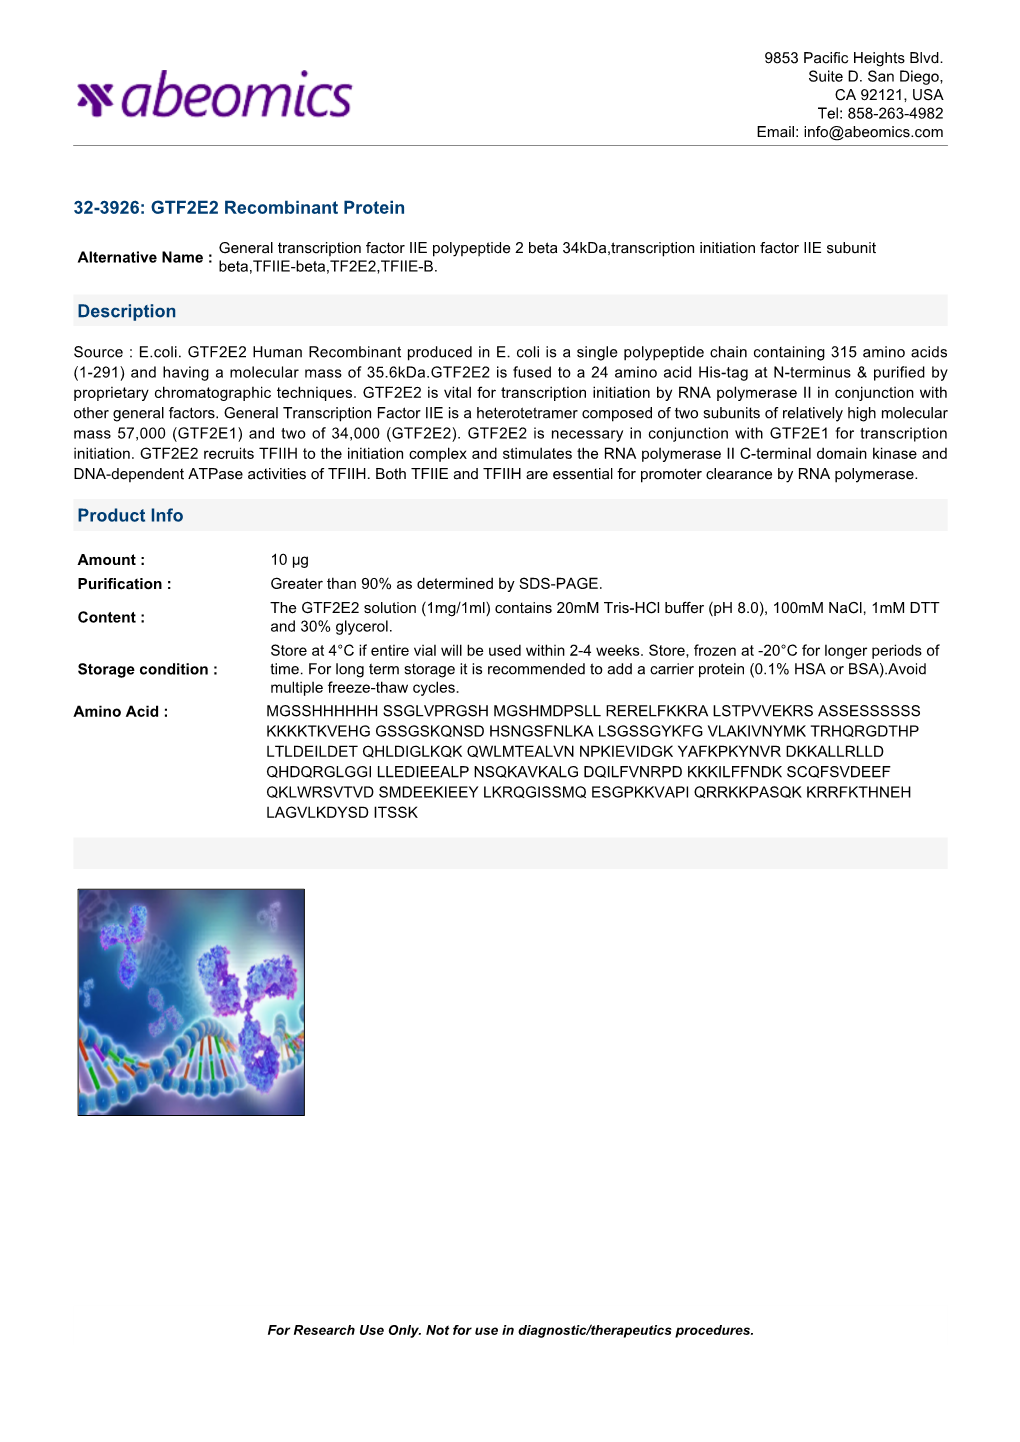 GTF2E2 Recombinant Protein Description Product Info